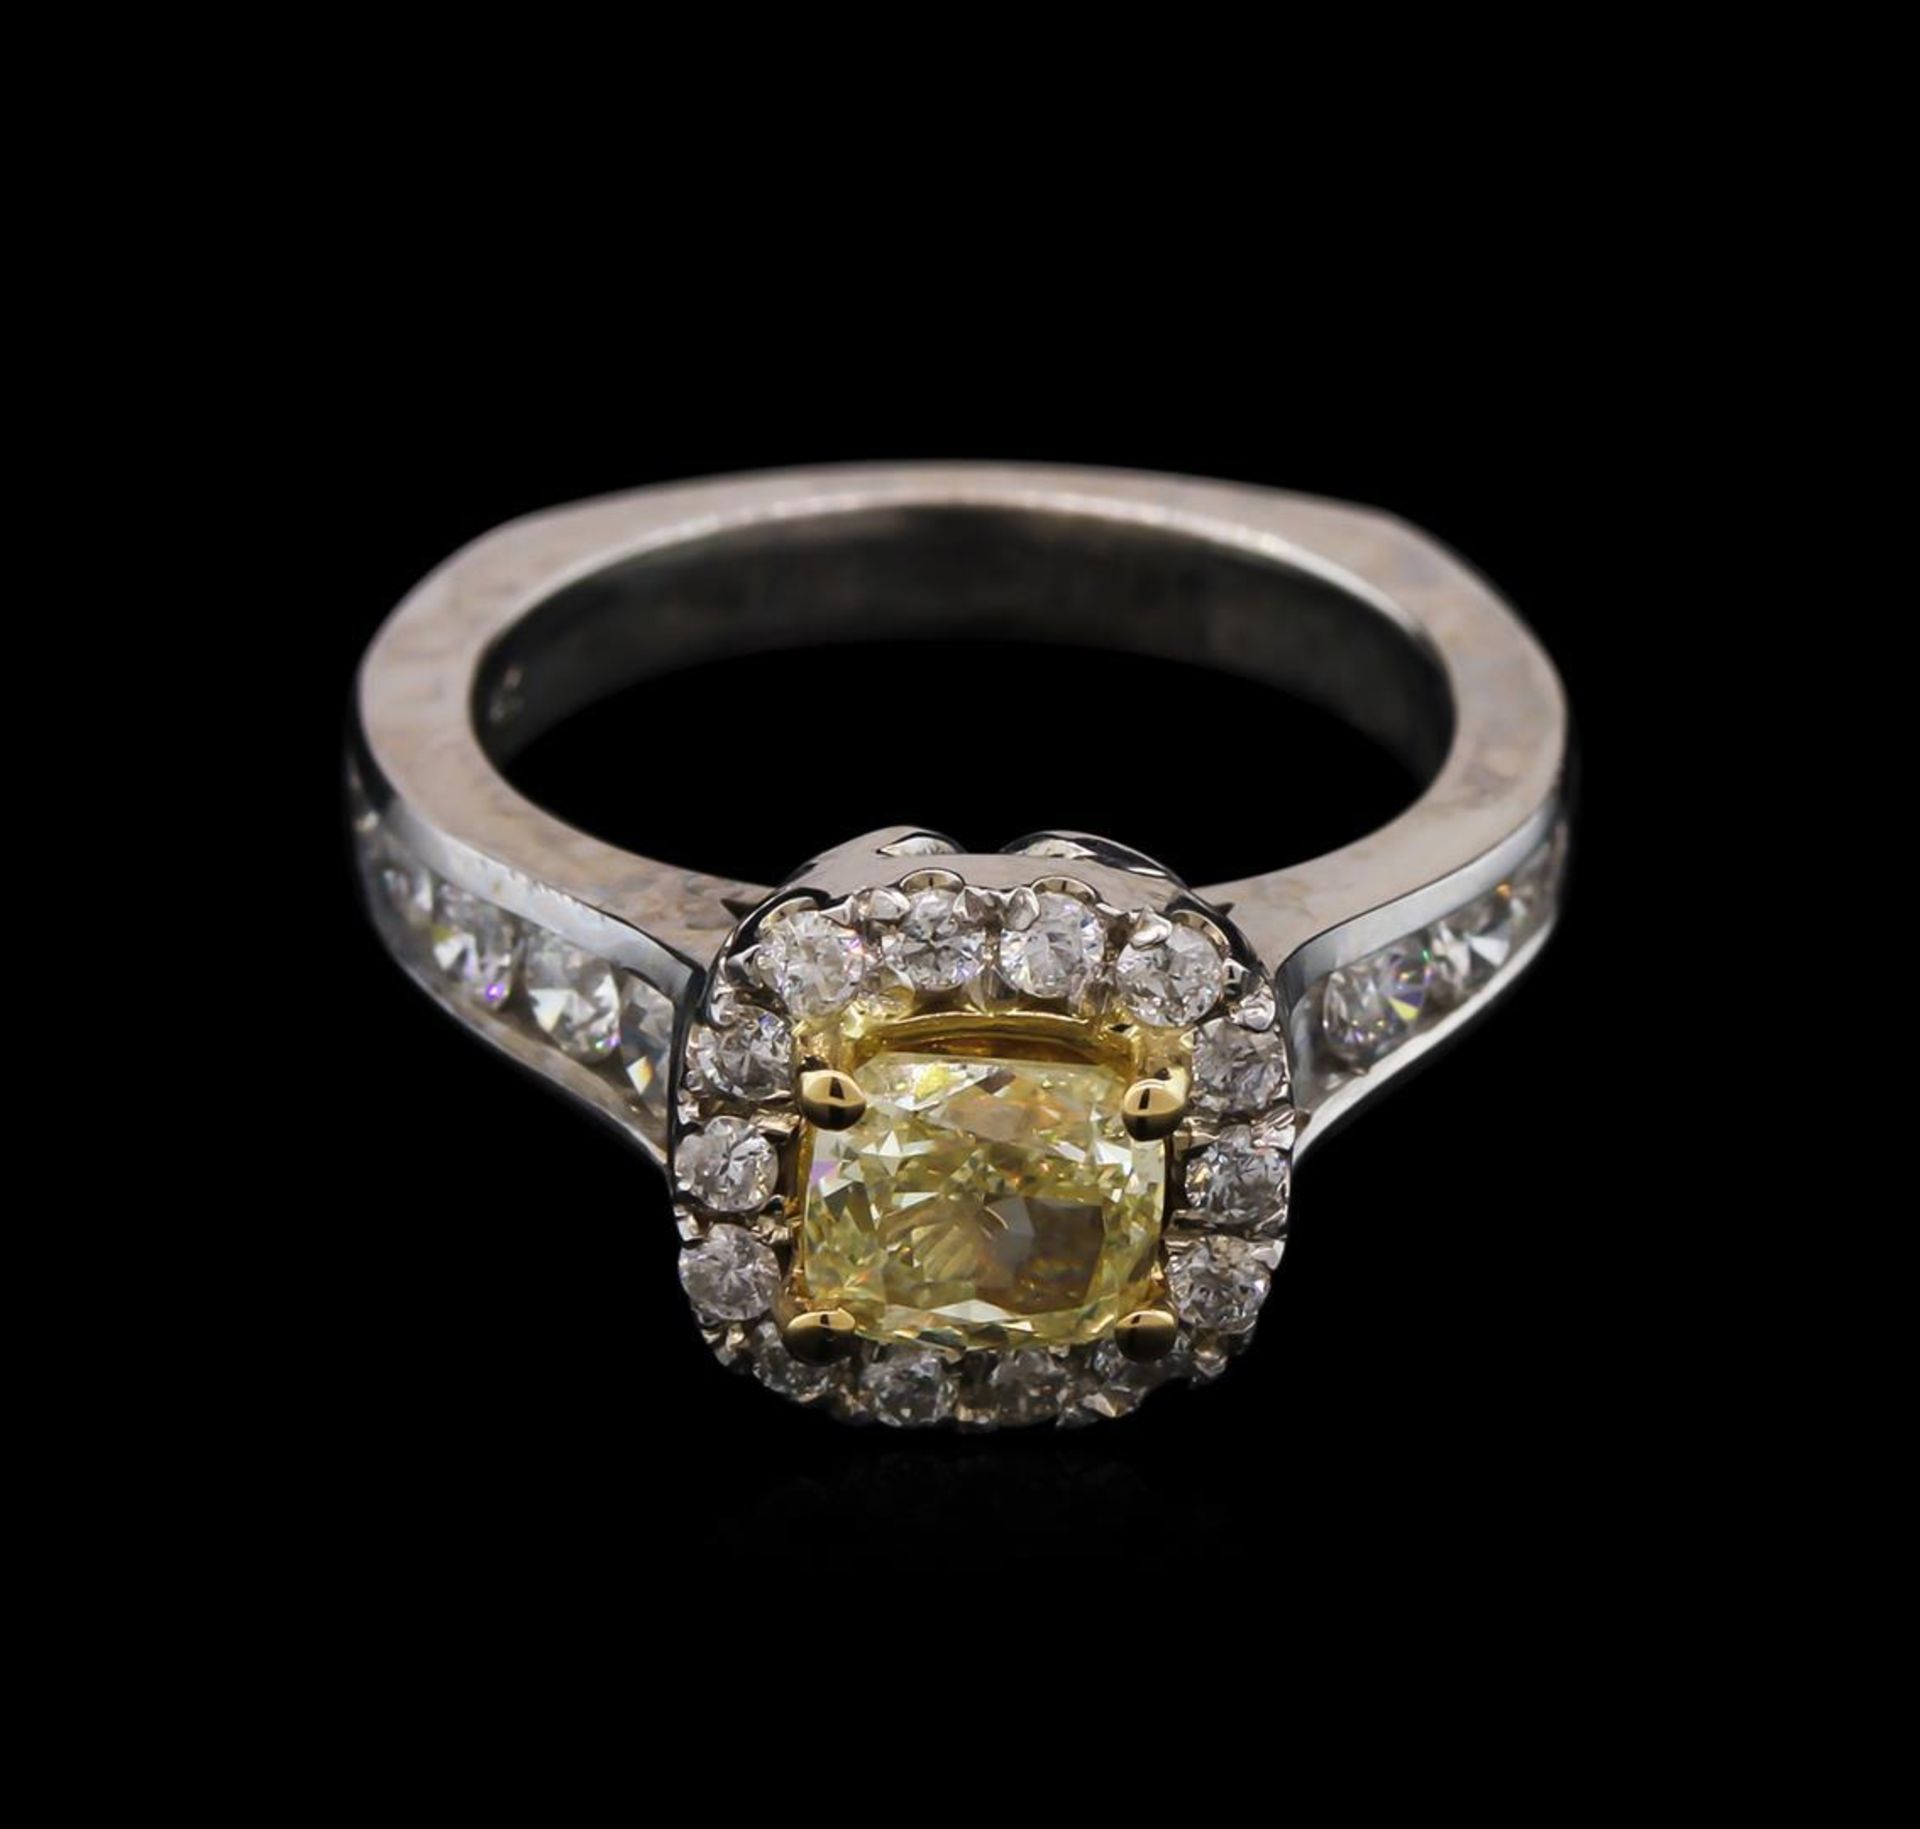 1.94 ctw Light Yellow Diamond Ring - 14KT White Gold - Image 2 of 3